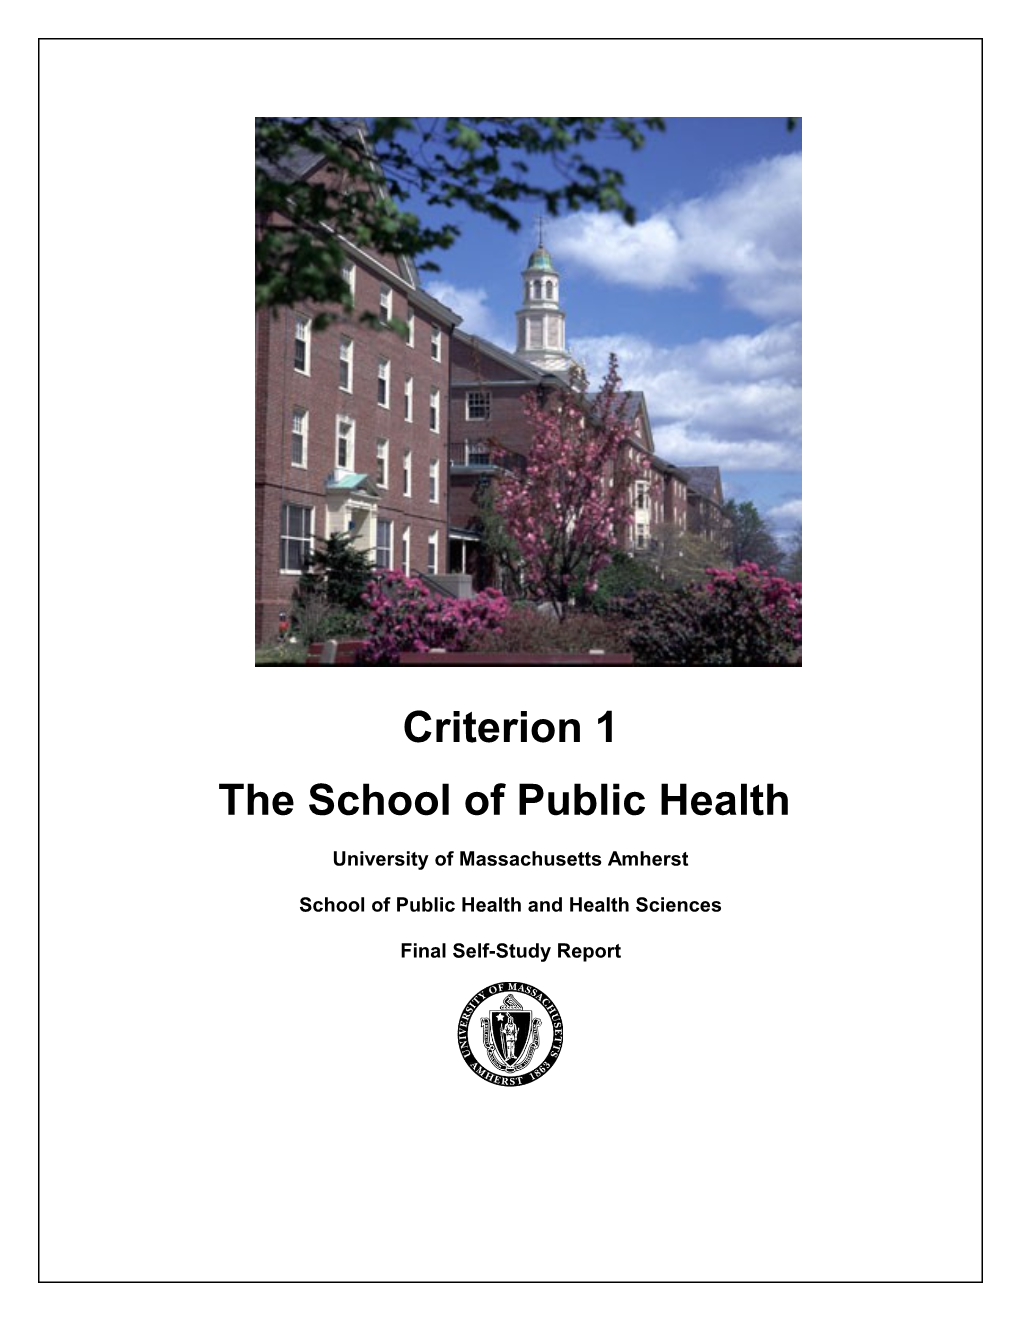 The School of Public Health